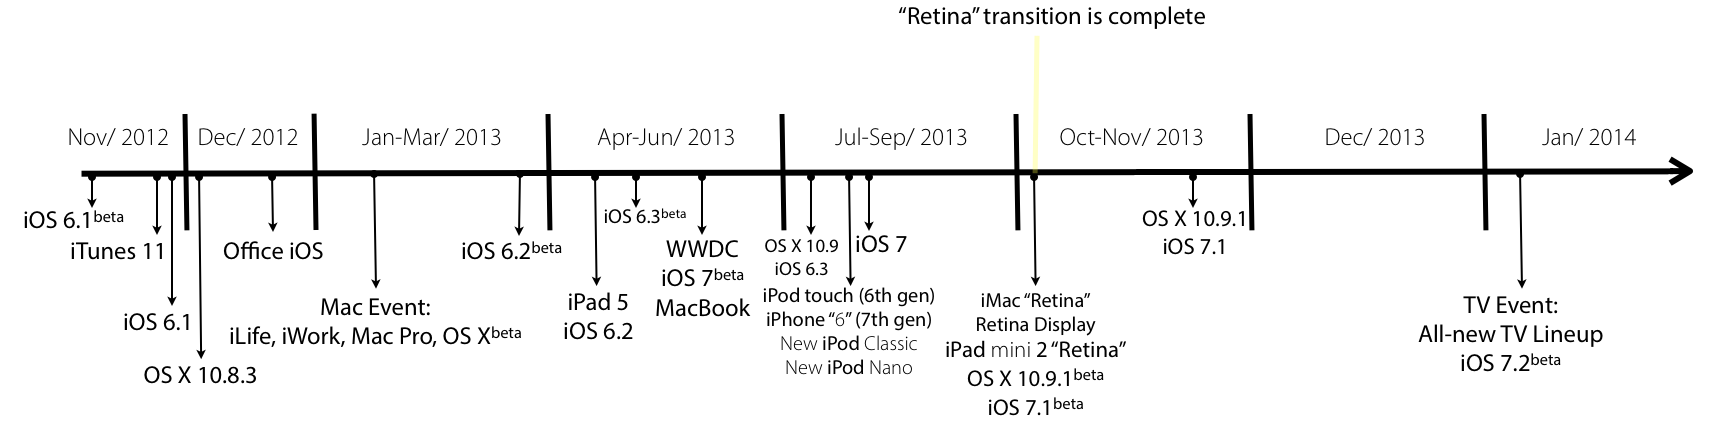 Timeline de produtos da Apple